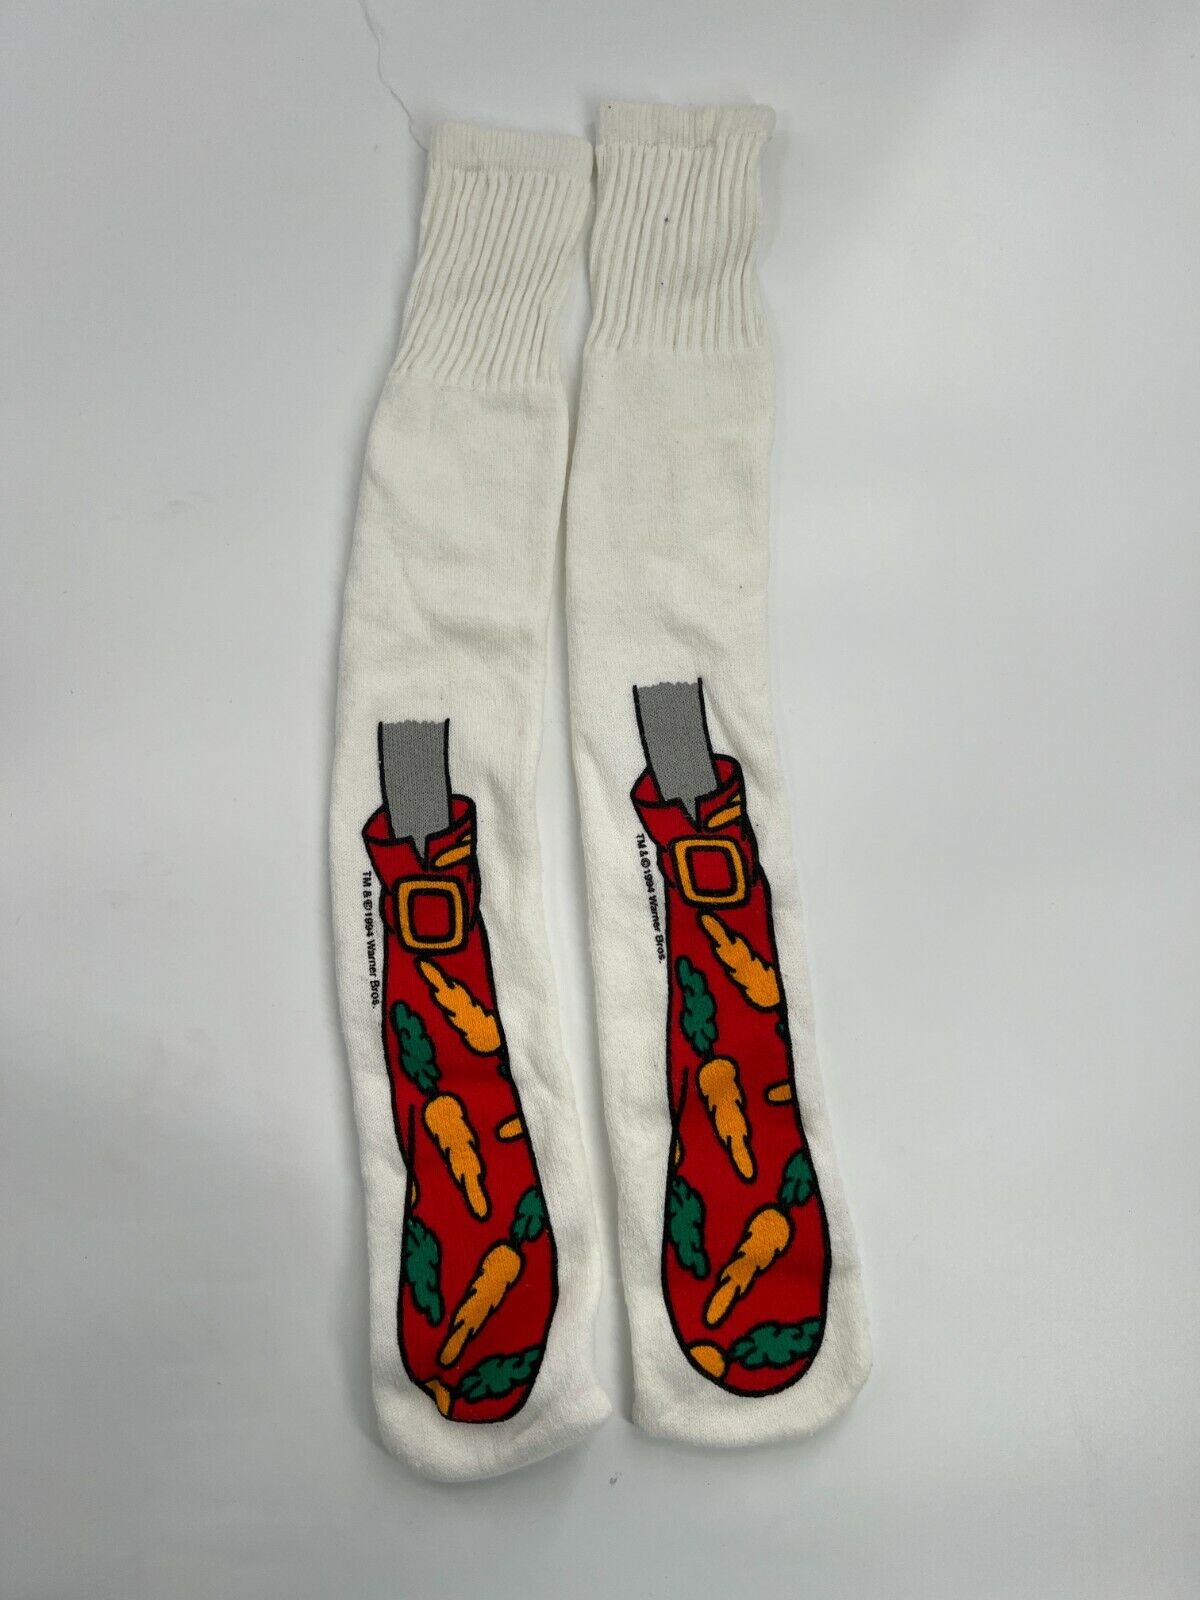 Vintage 90s WARNER Bros BROTHERS Shoe GRAPHIC Socks 1994 Carrots Bugs Bunny